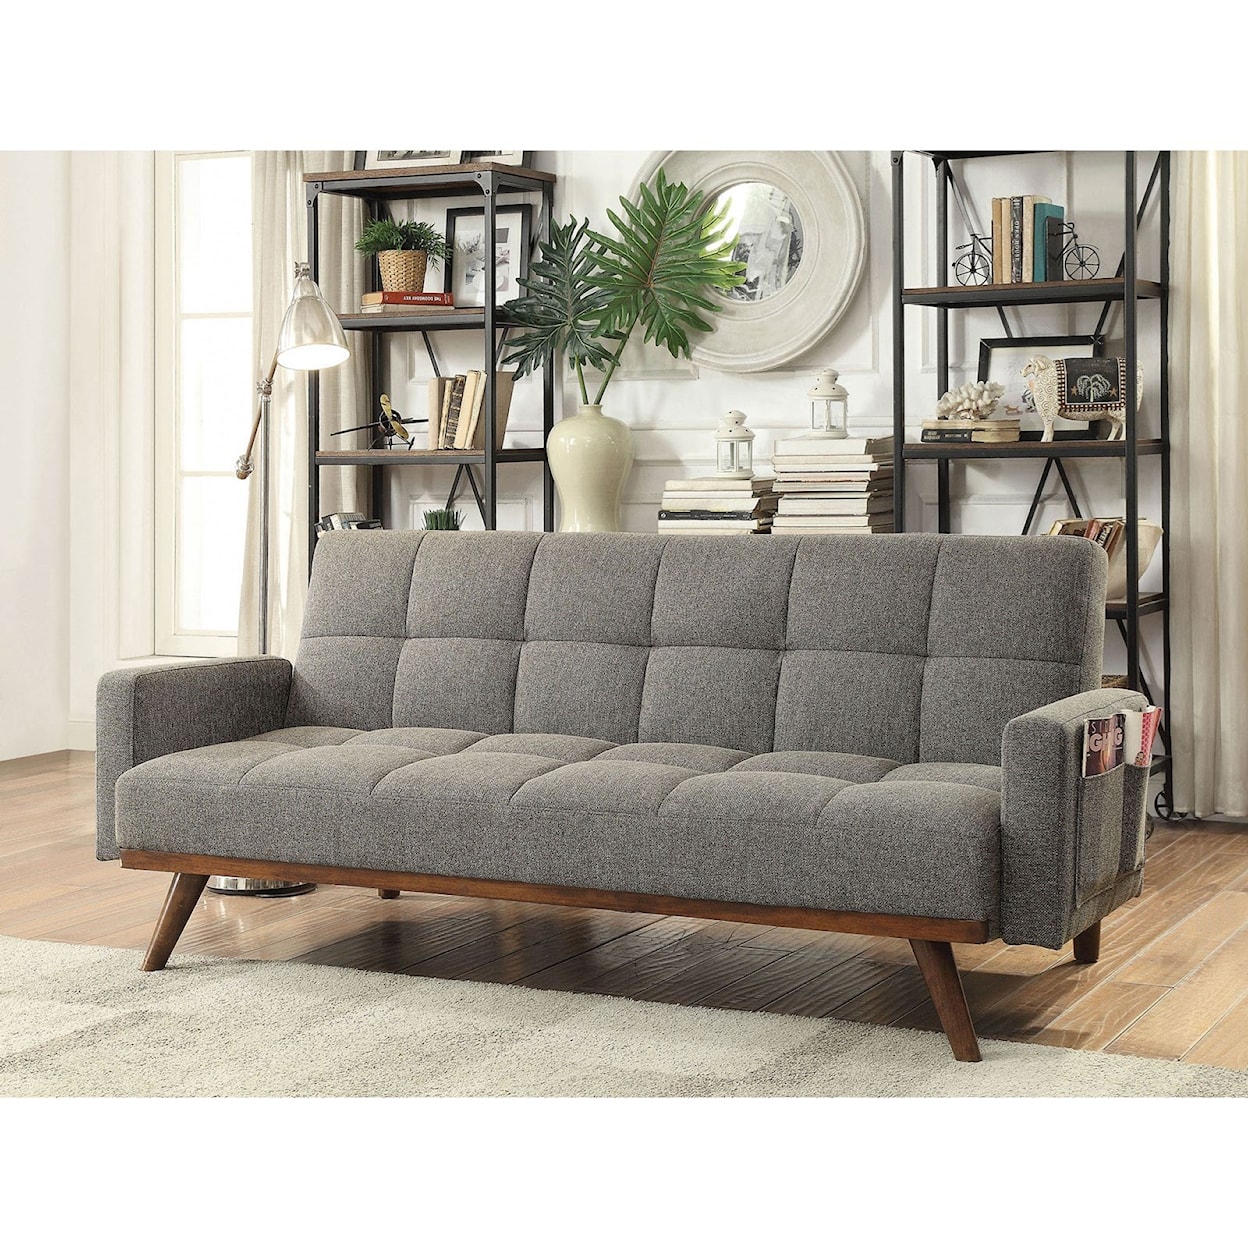 Furniture of America Nettie Futon Sofa